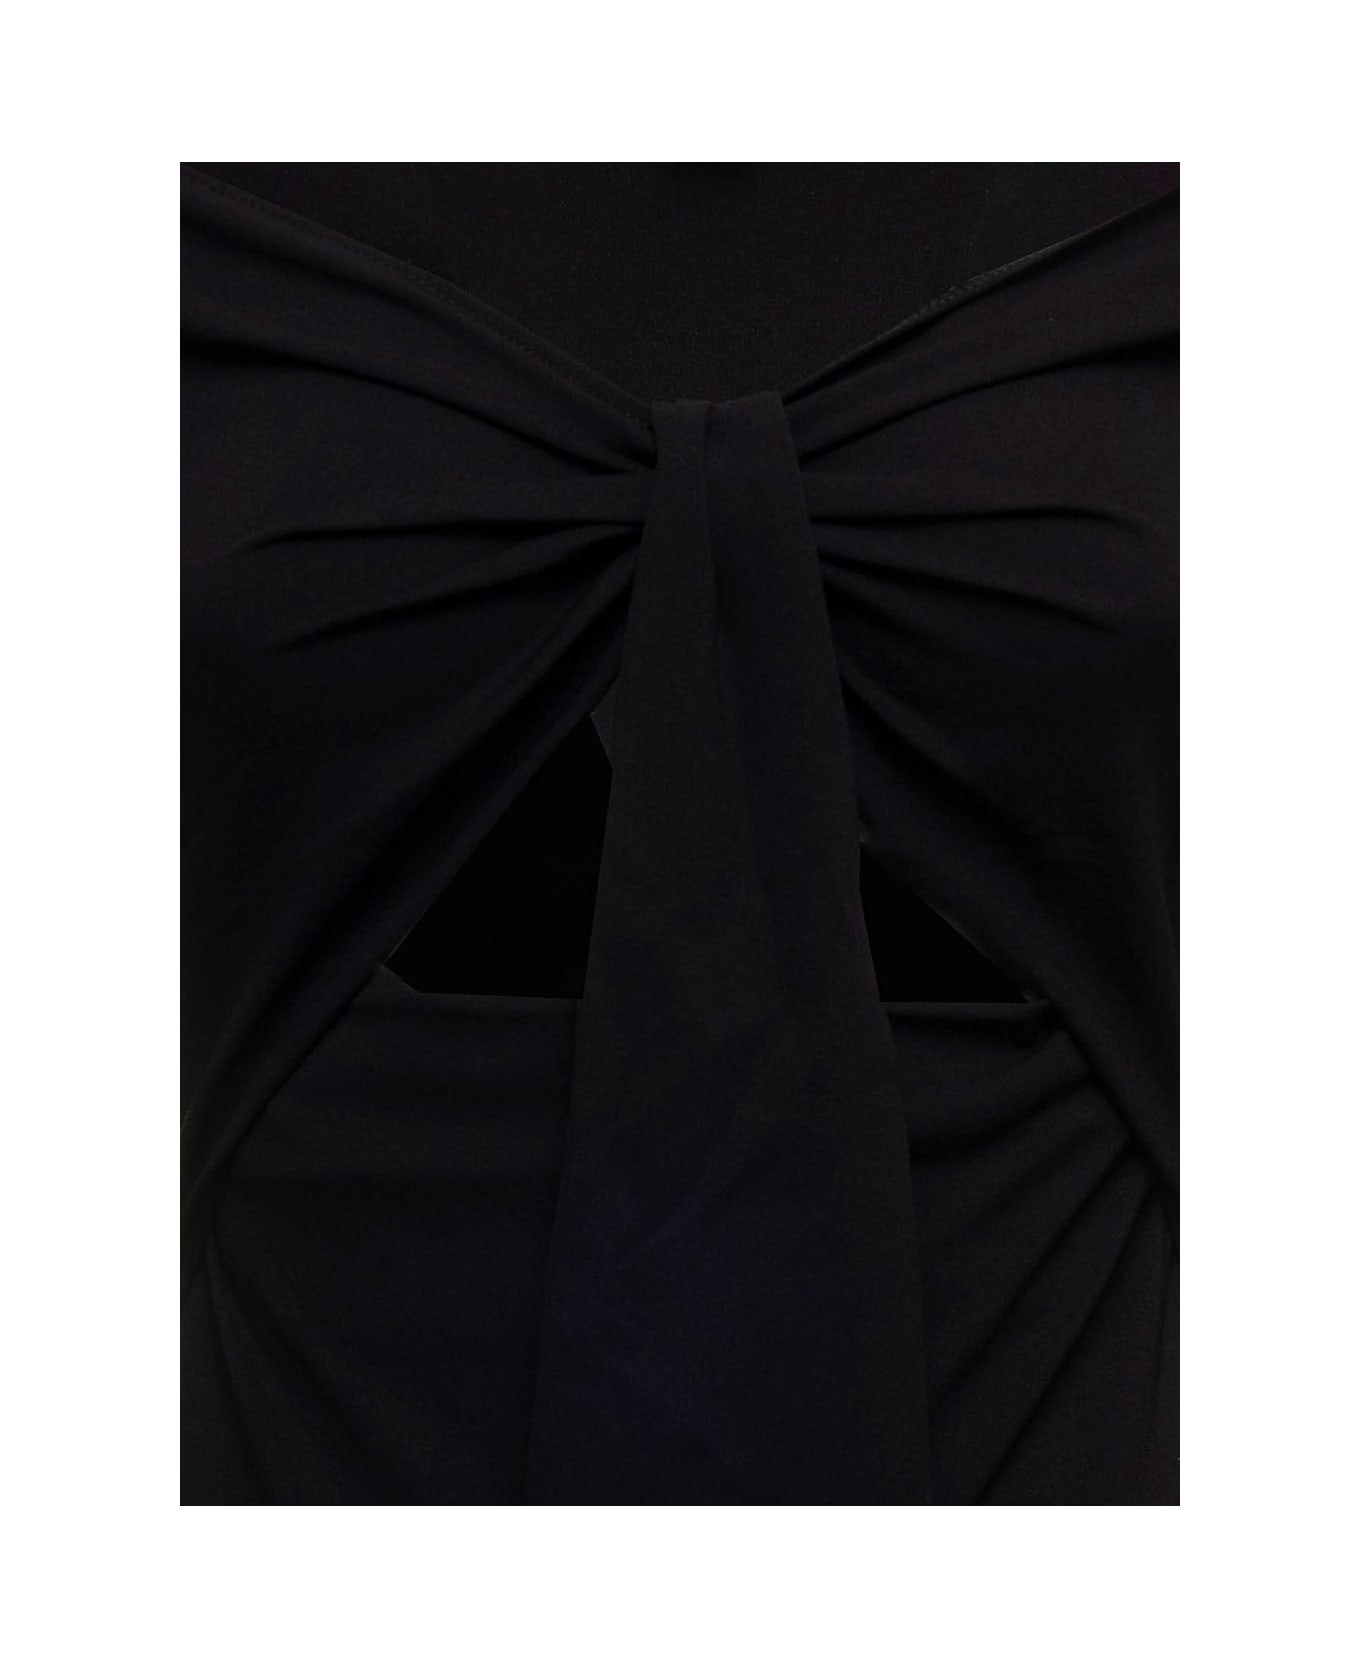 Alexander McQueen Black Stretch Fabric Body With Cut Out Inserts Alexander Mcqueen Woman - Black ボディスーツ